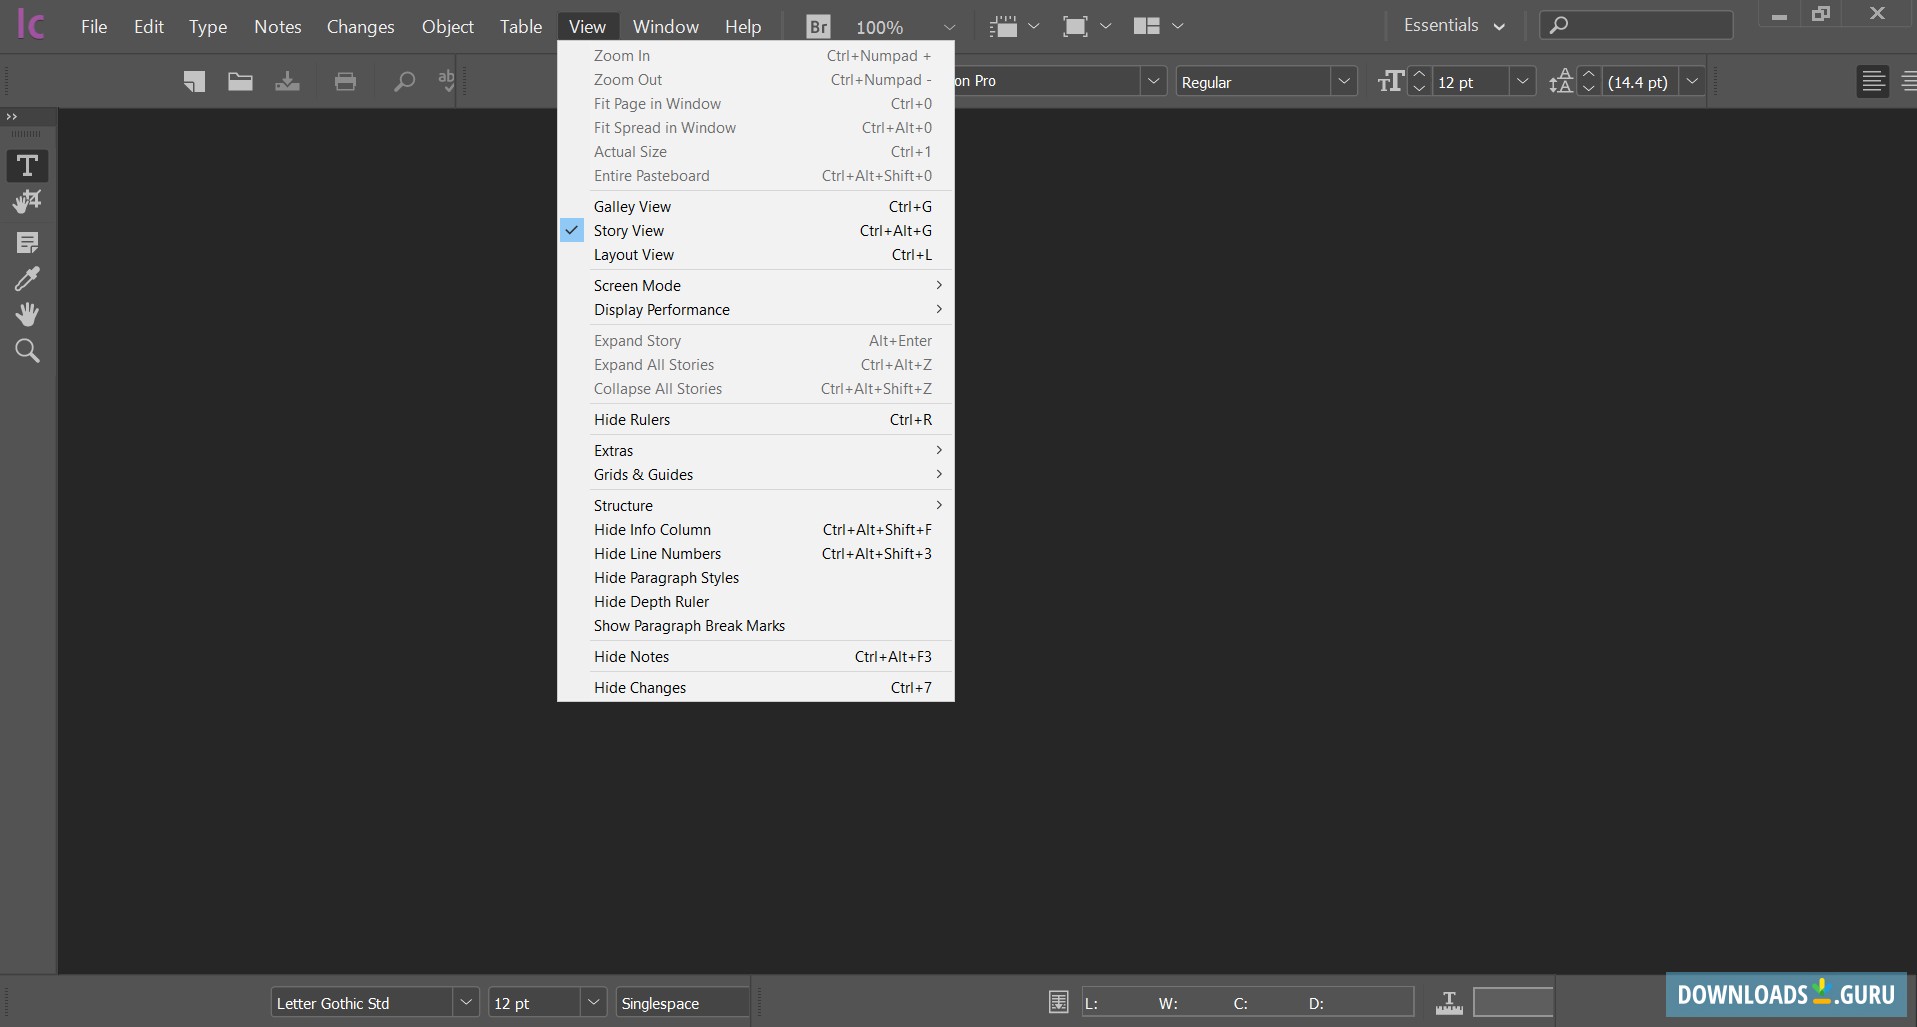 download the last version for apple Adobe InCopy 2023 v18.4.0.56